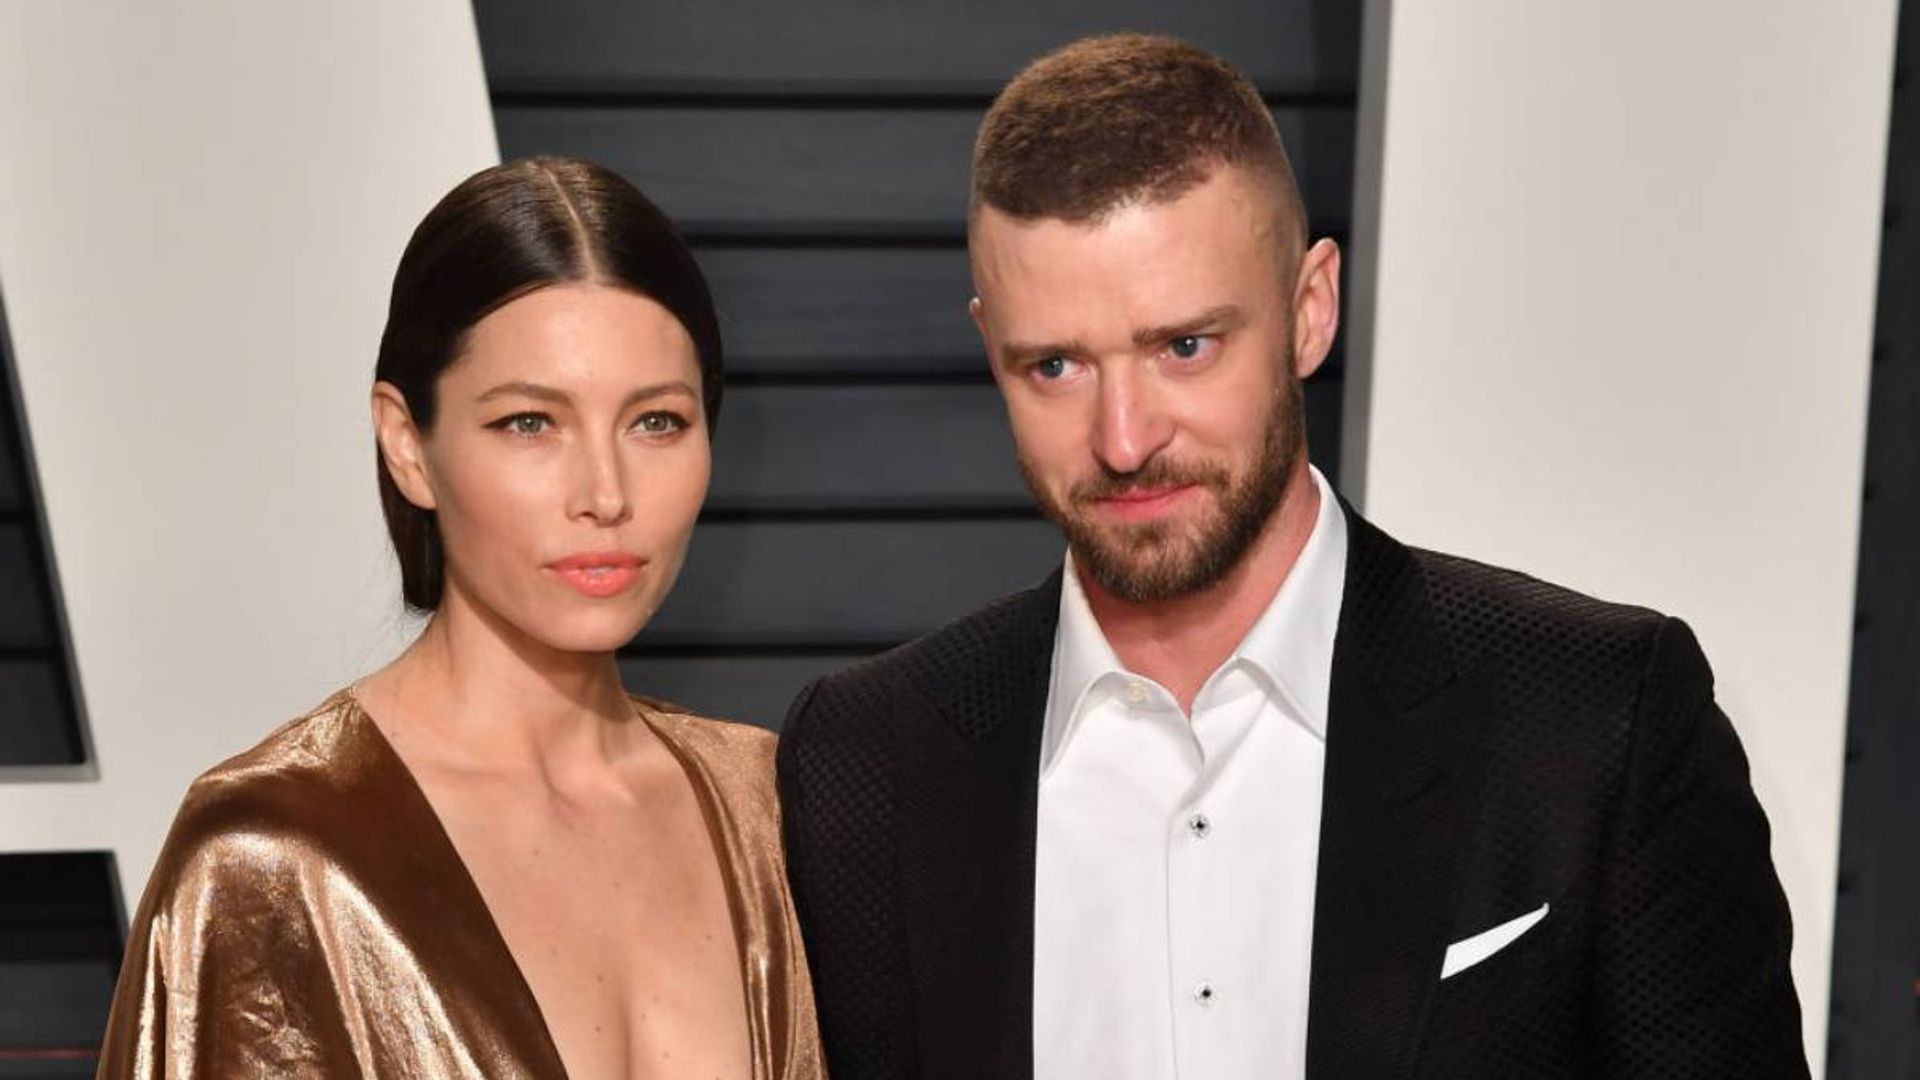 Justin Timberlake shares devastating news as fans send prayers